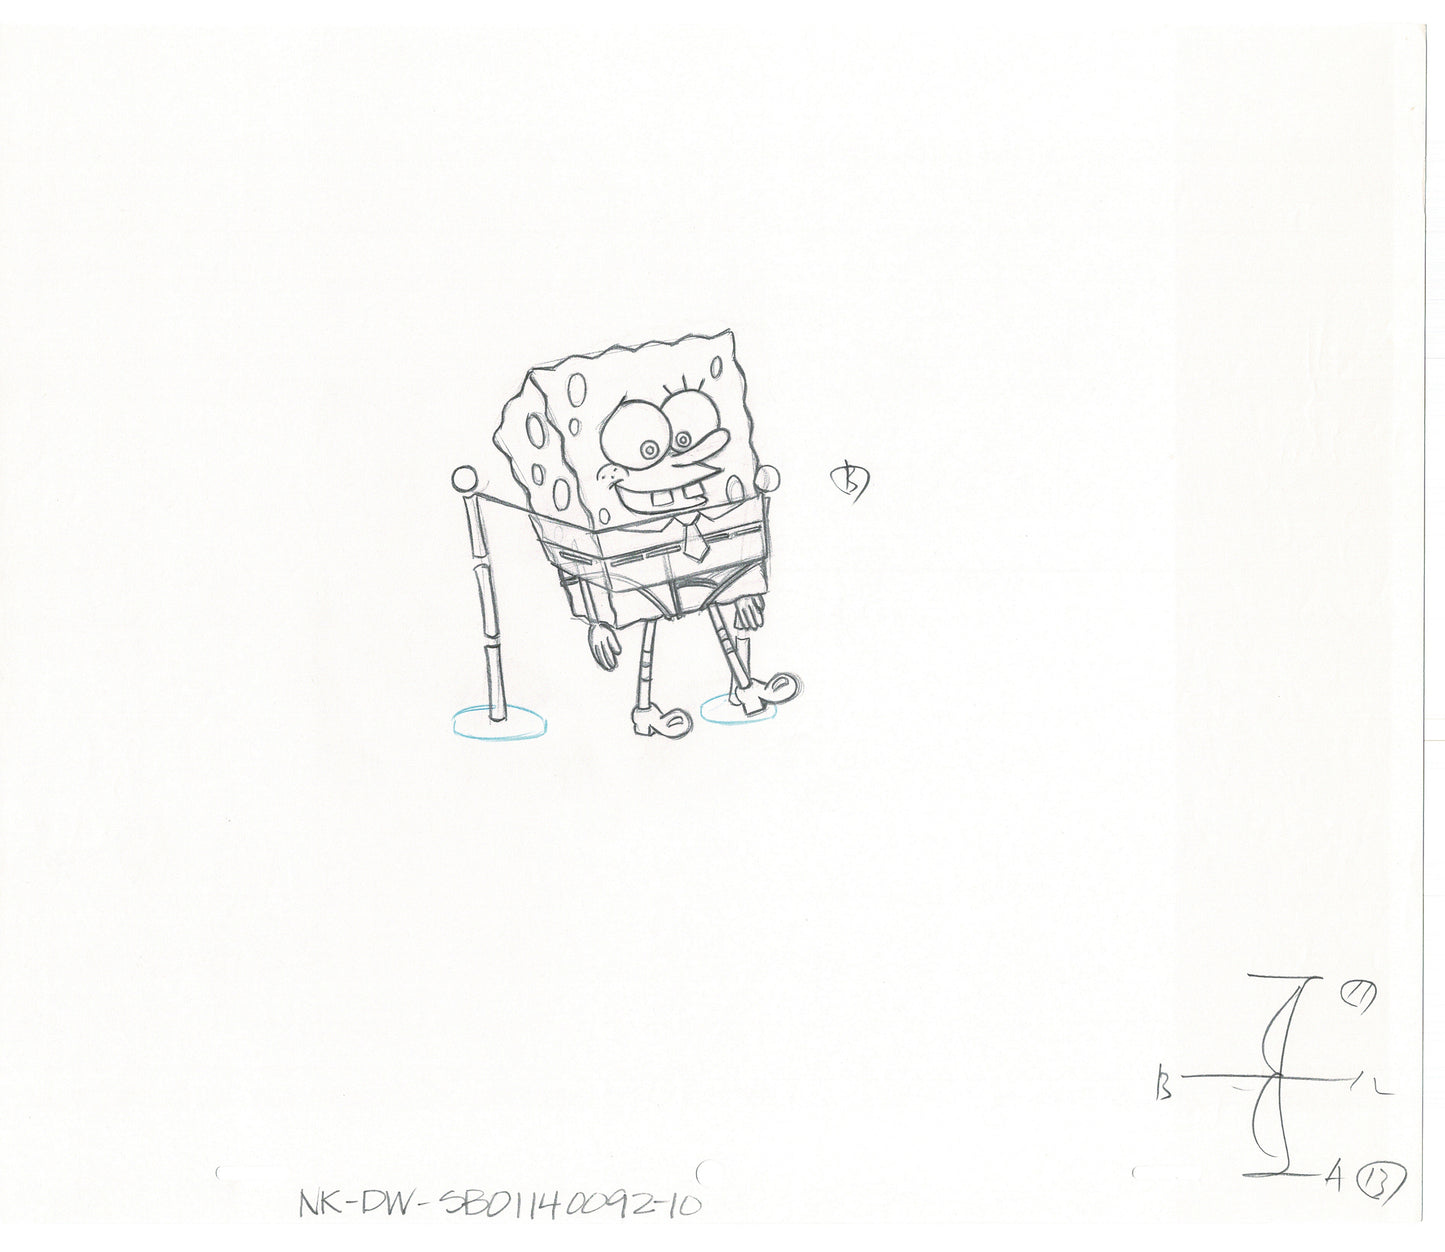 Spongebob Squarepants Production Animation Cel Drawing Nickelodeon 1999-2014 A-7